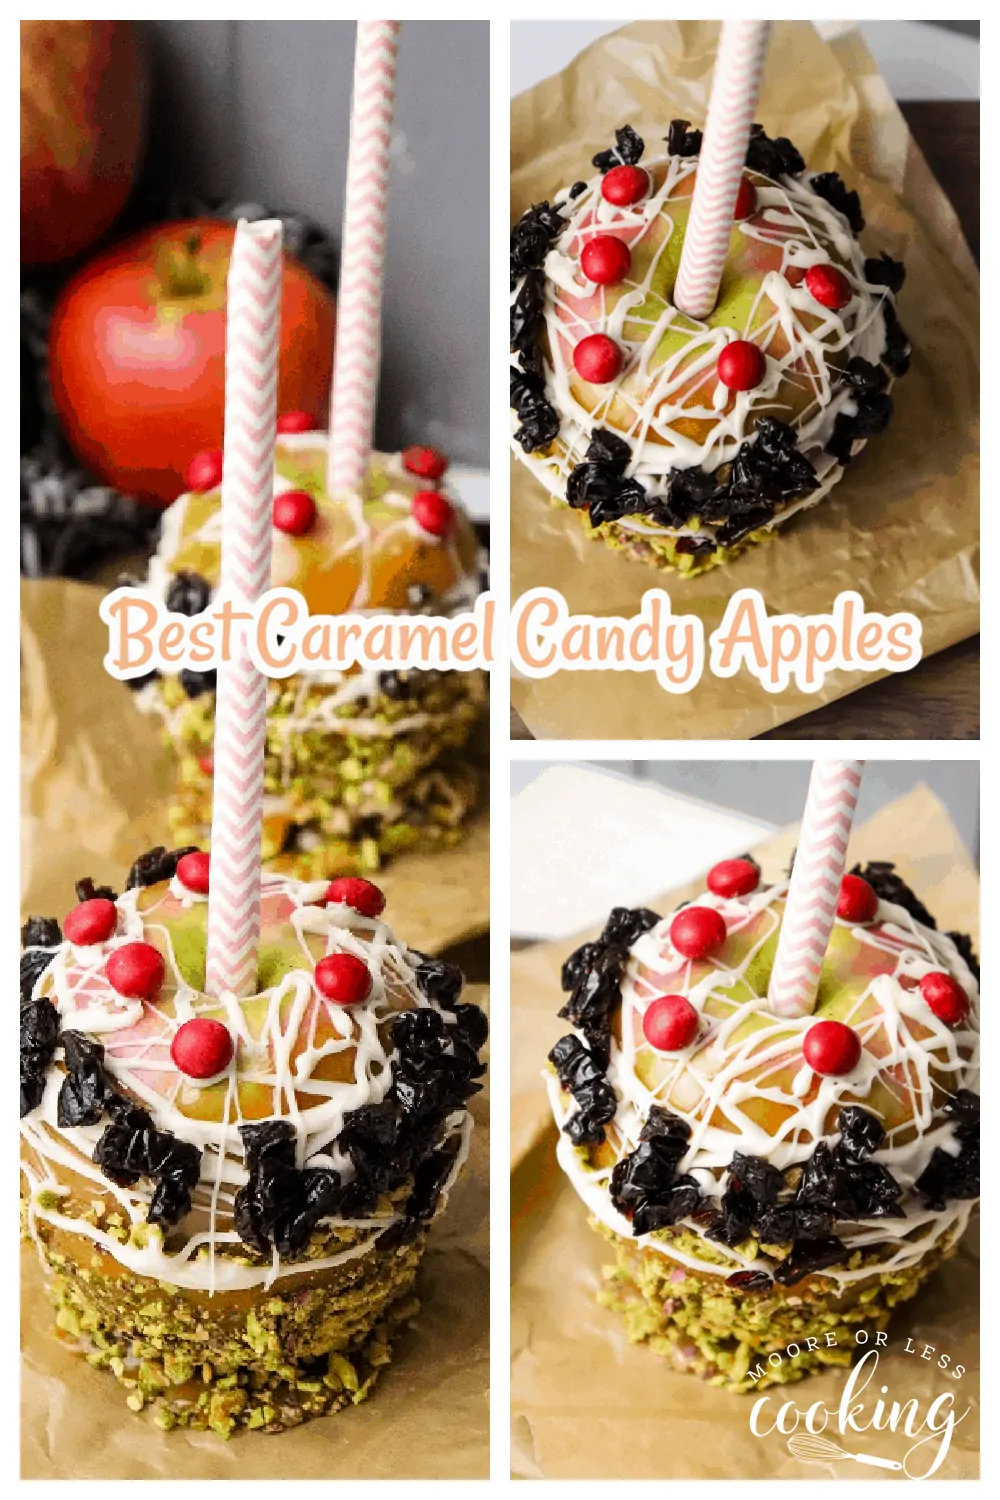 Best Caramel Candy Apples